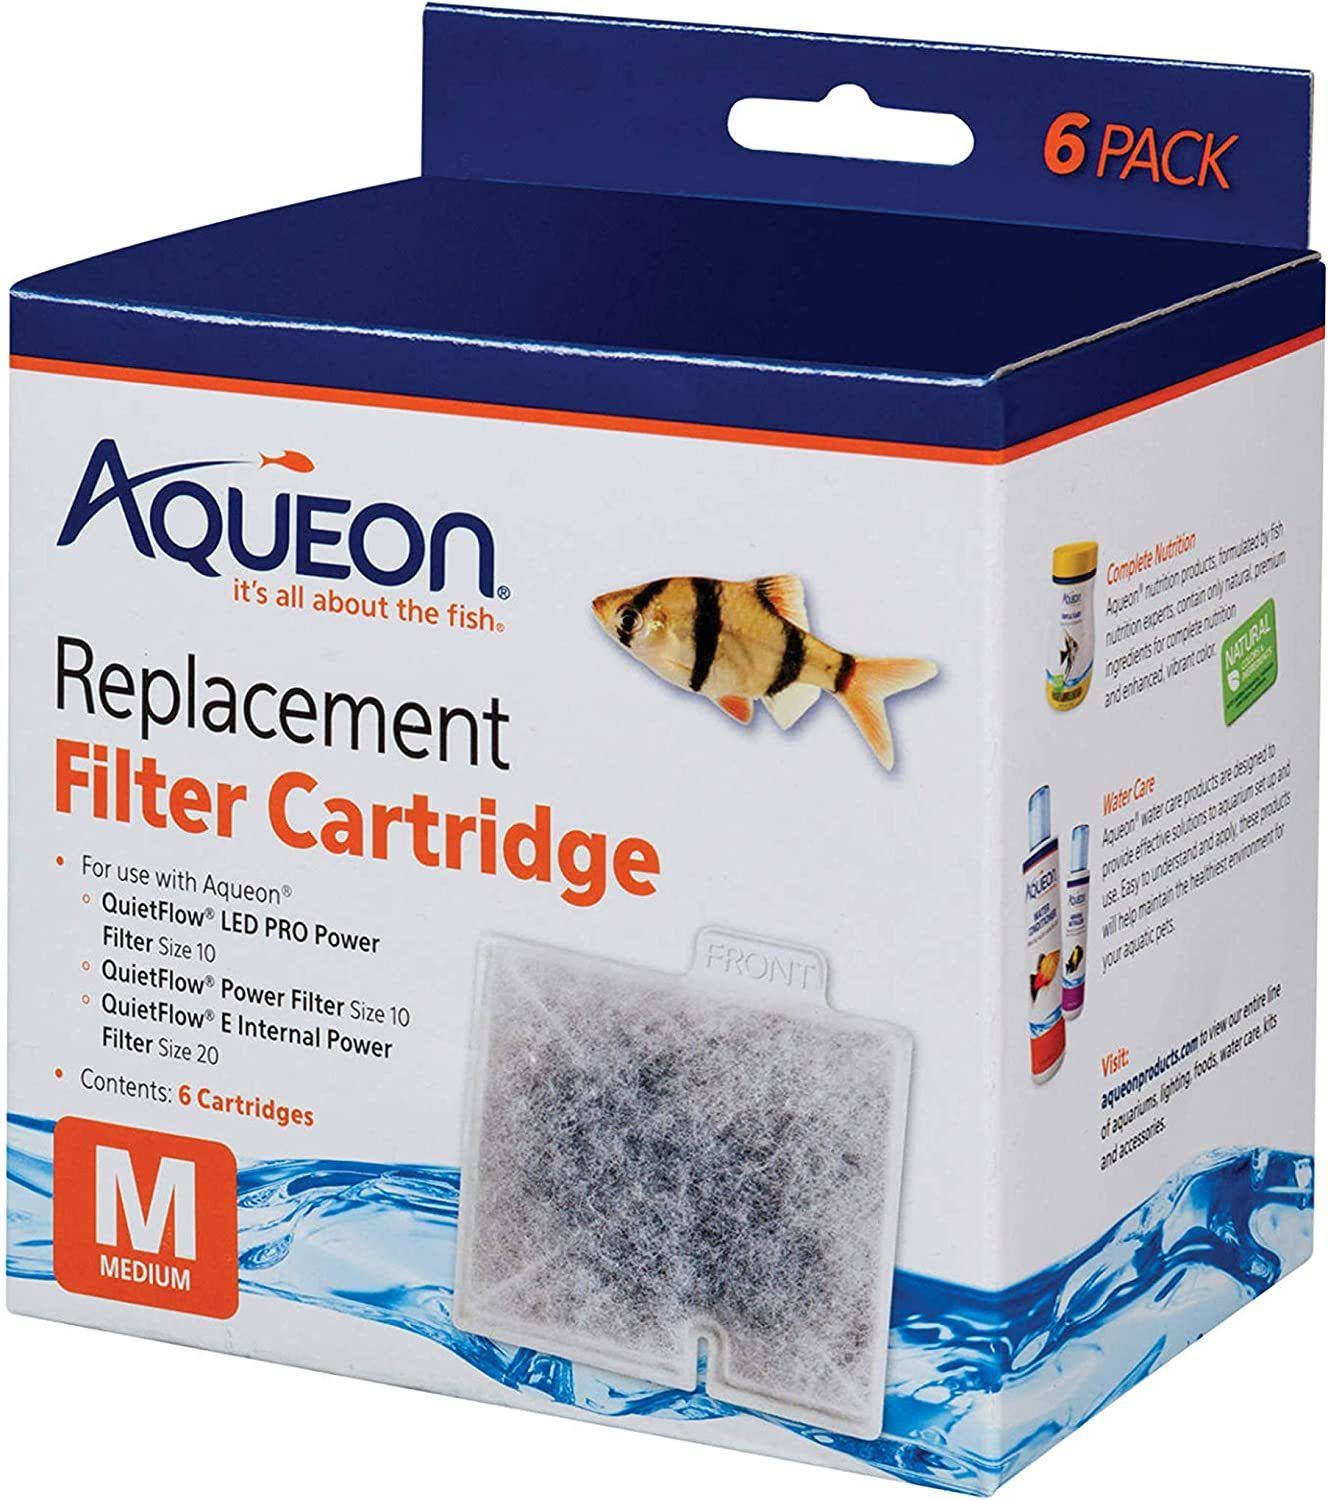 Aqueon Medium Replacement Filter Cartridge - 6 Pack